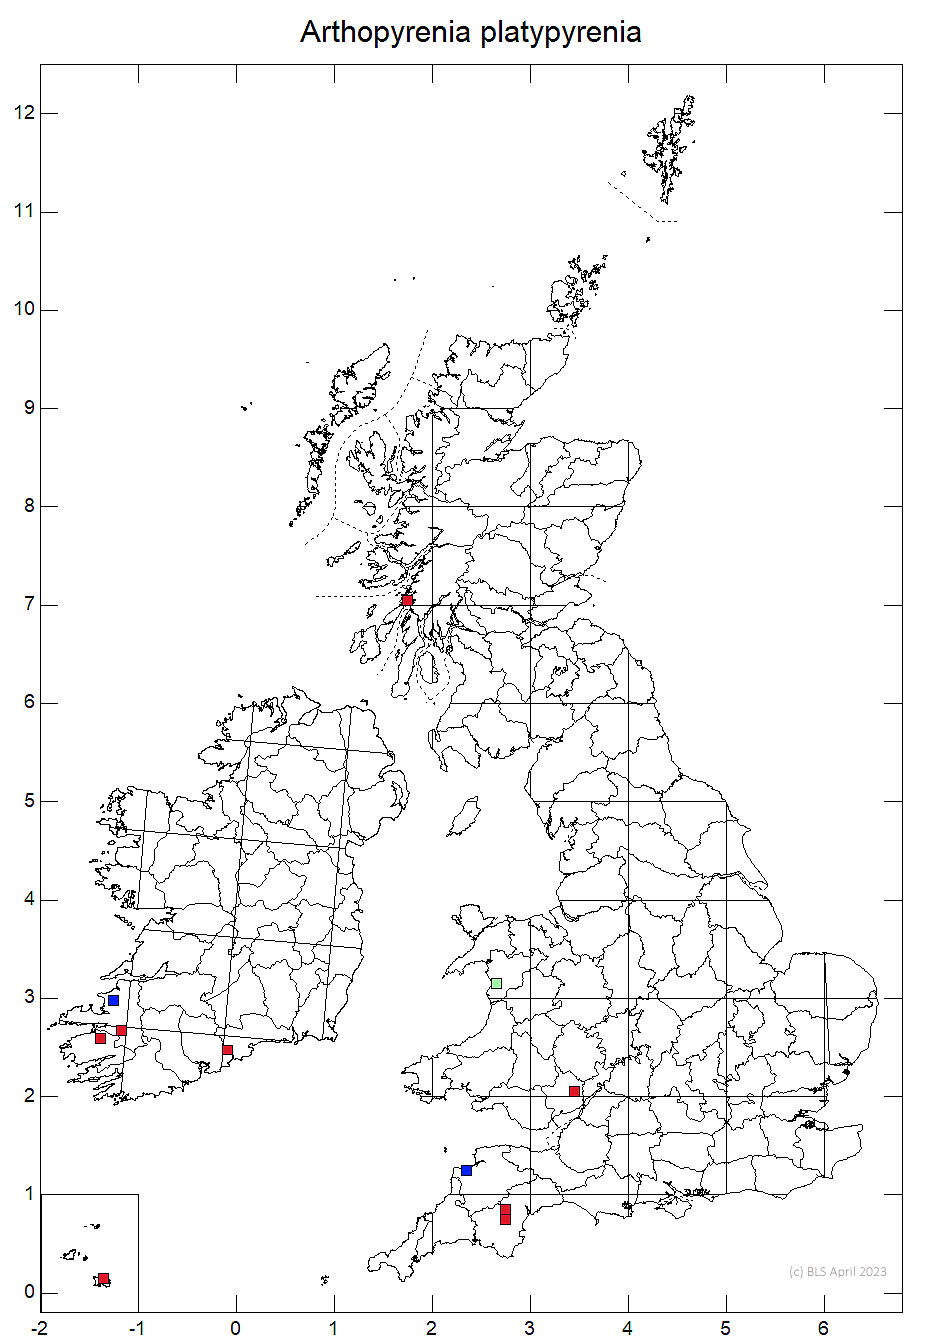 Arthopyrenia platypyrenia 10km sq distribution map